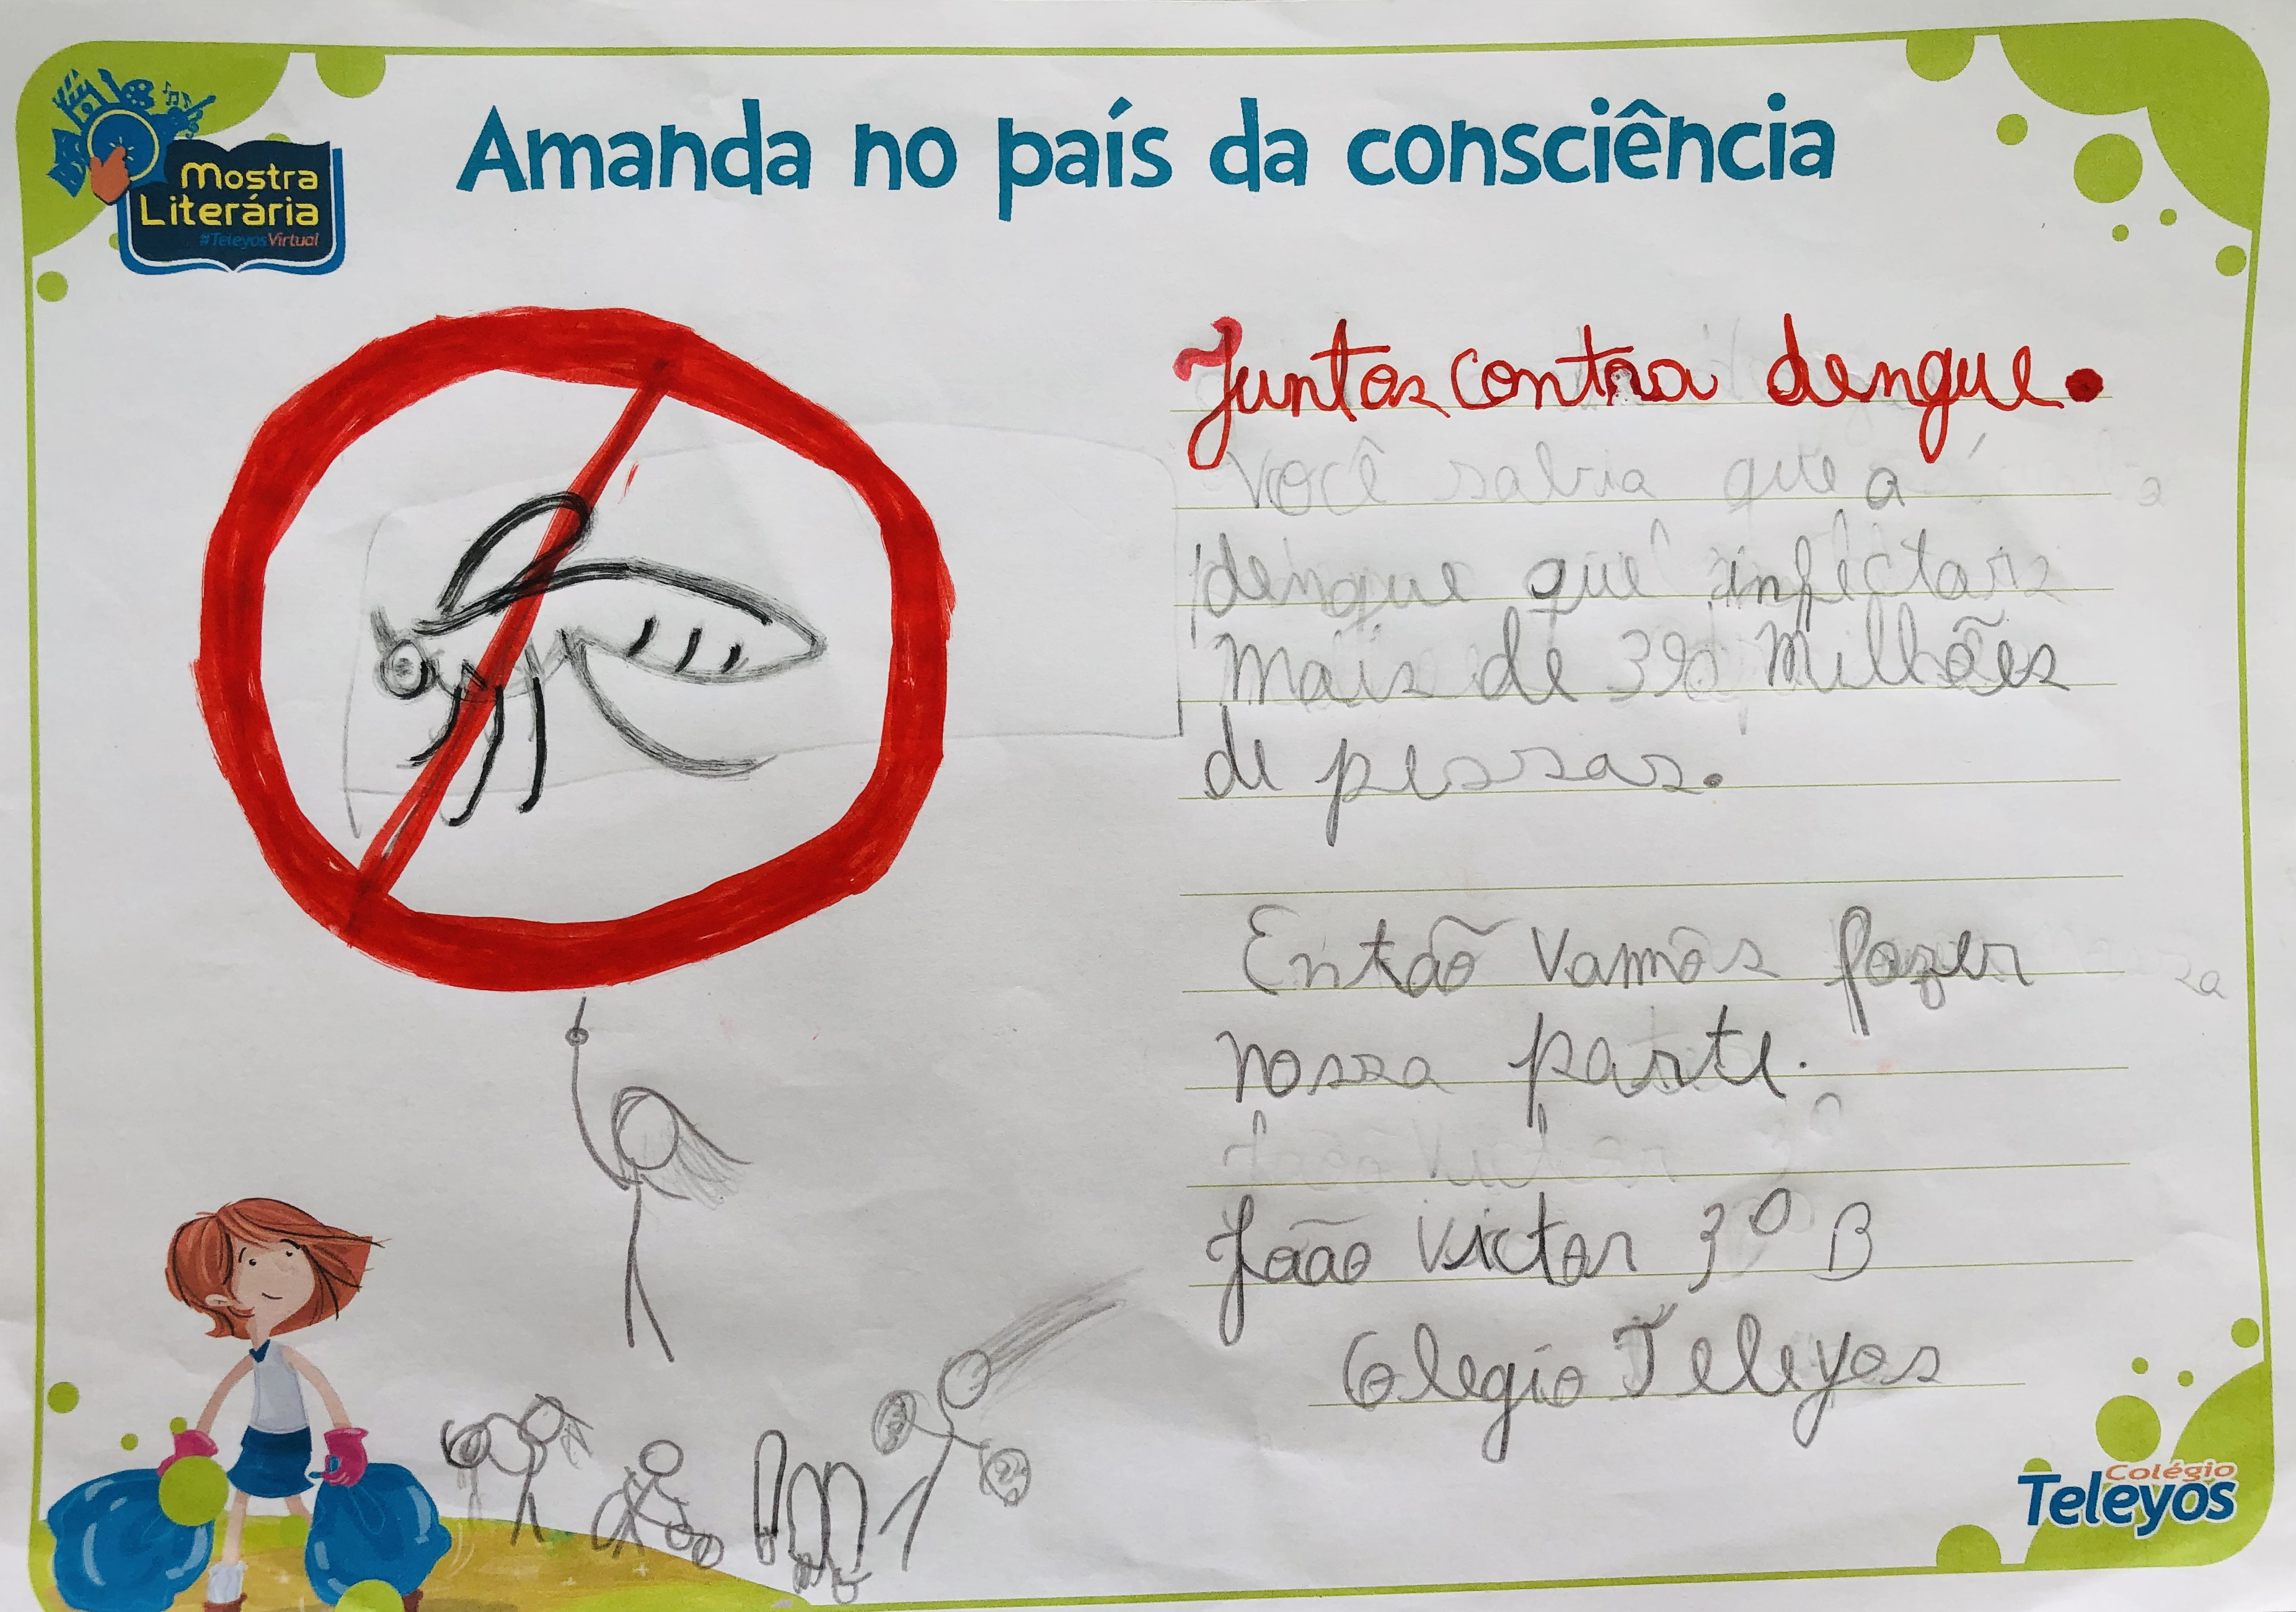  JOÃO VICTOR -  Juntos contra a dengue!
